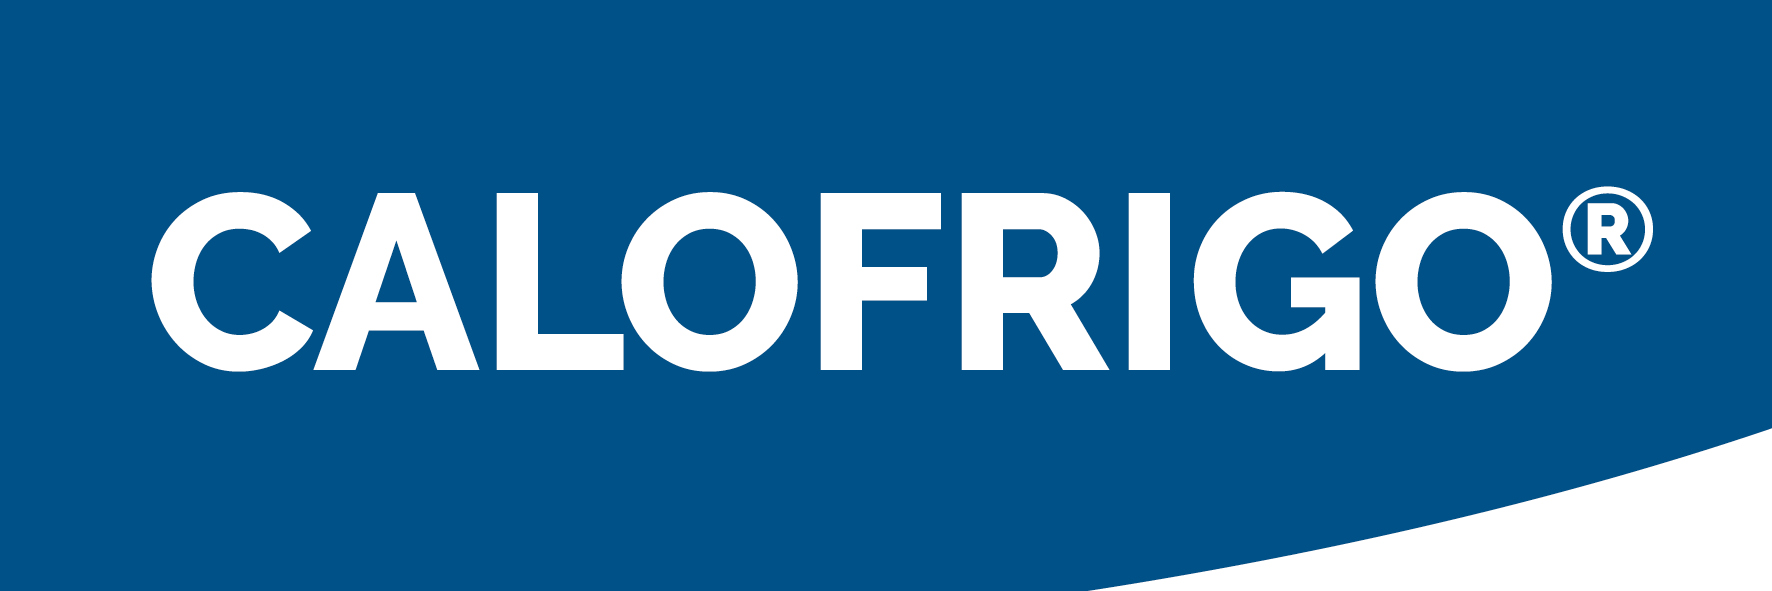 CALOFRIGO-logo